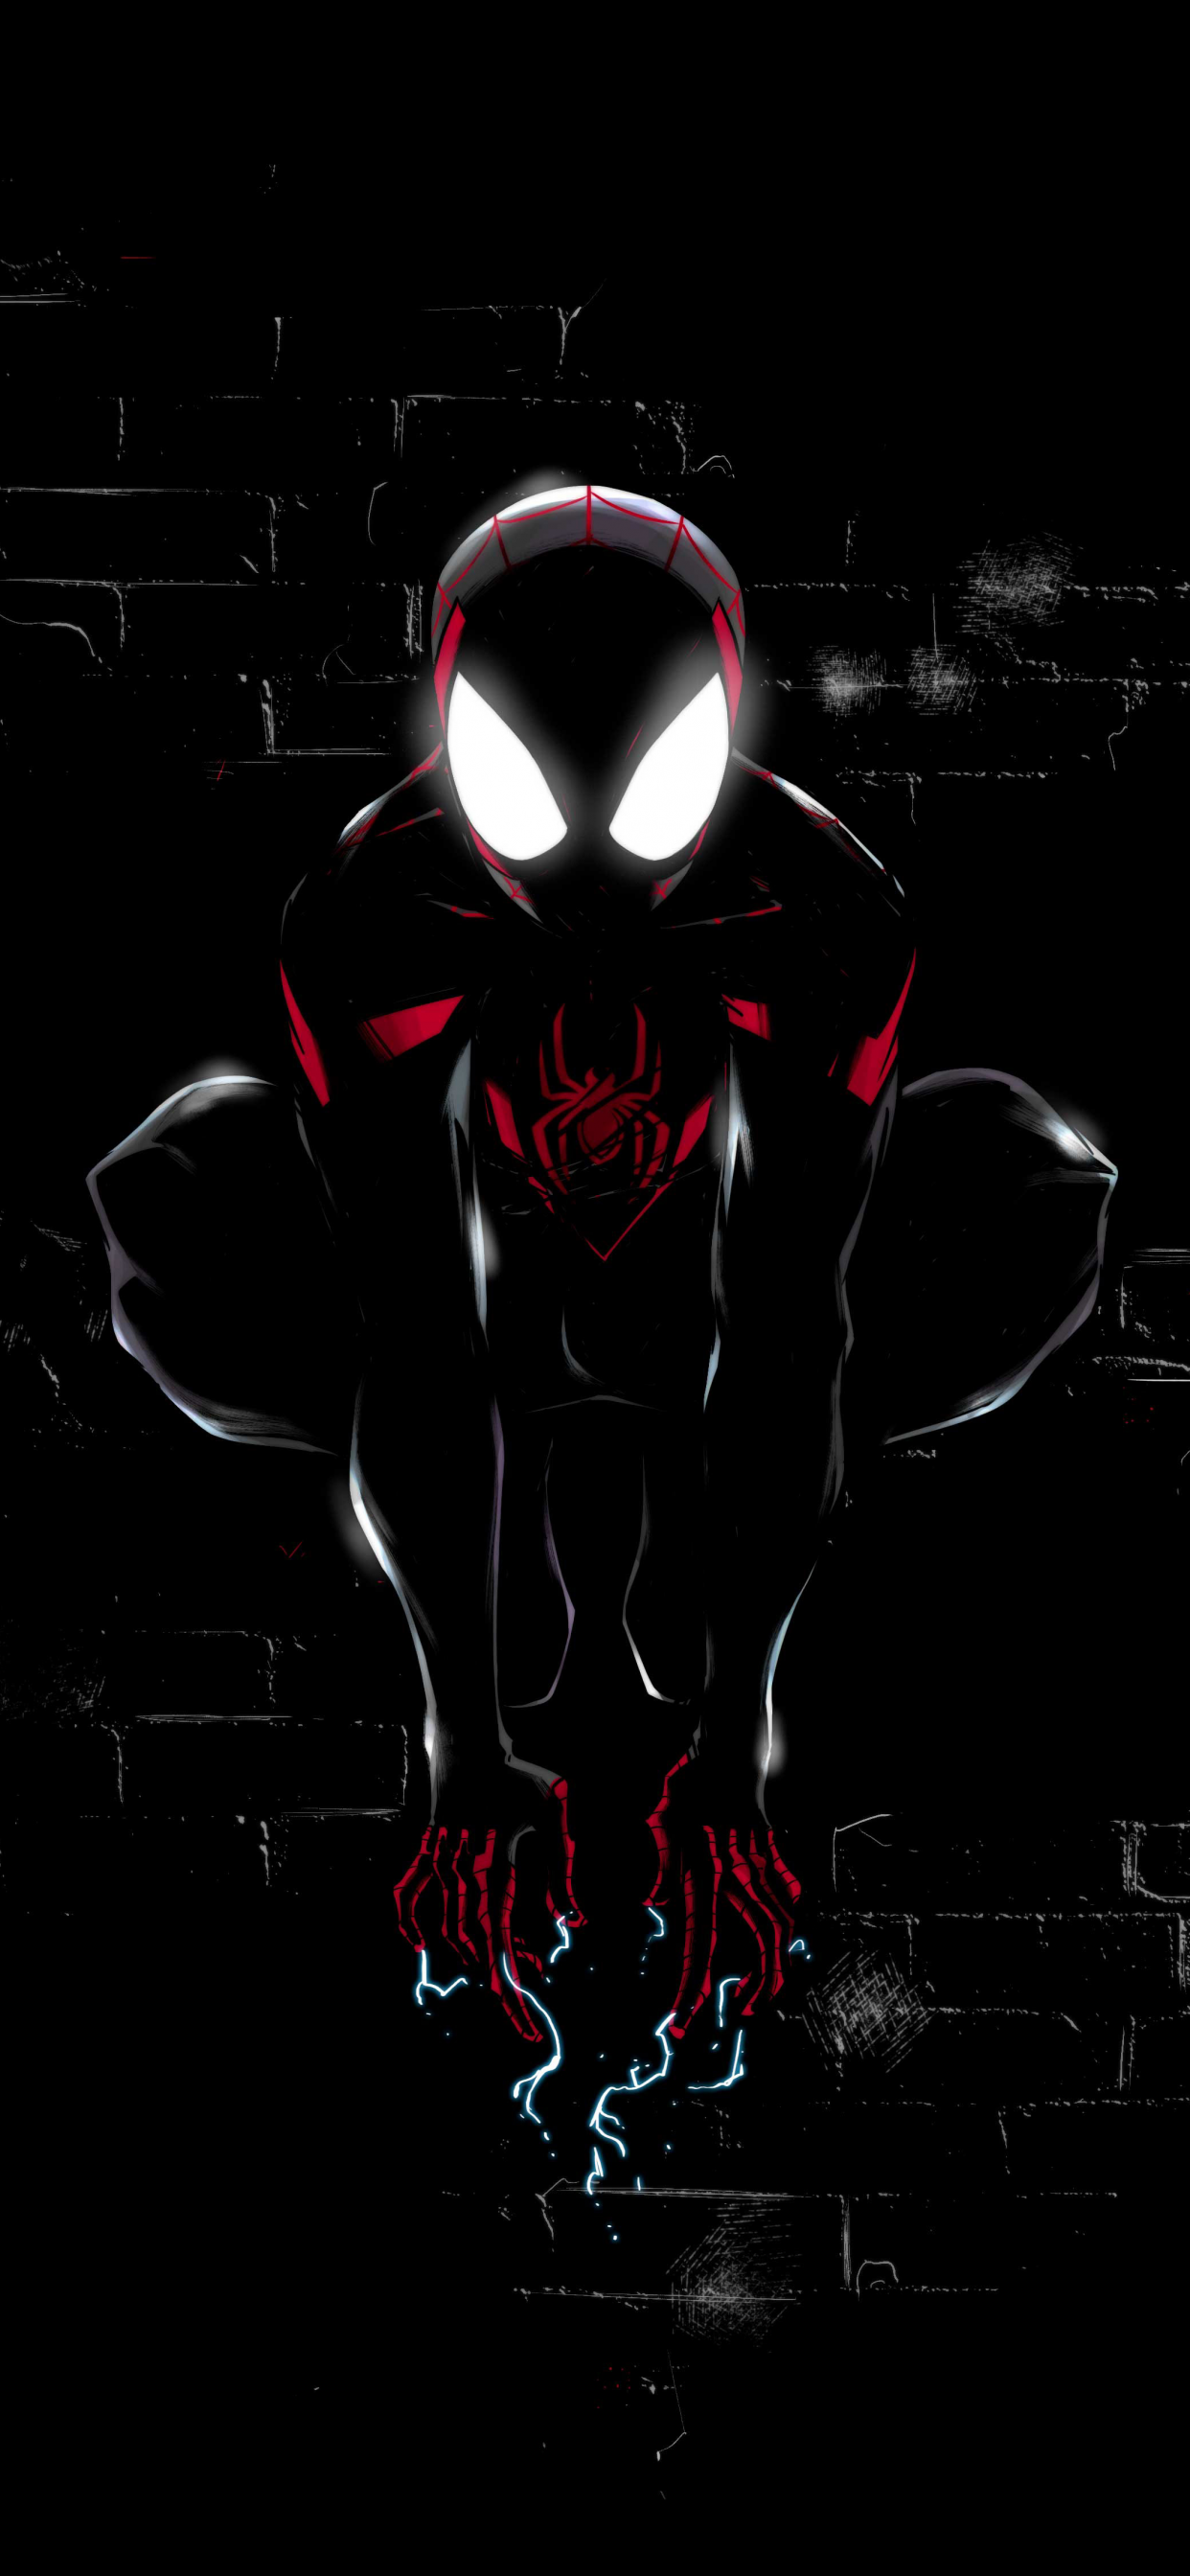 marvels spiderman miles morales 4k 2020 iPhone 11 Wallpapers Free Download